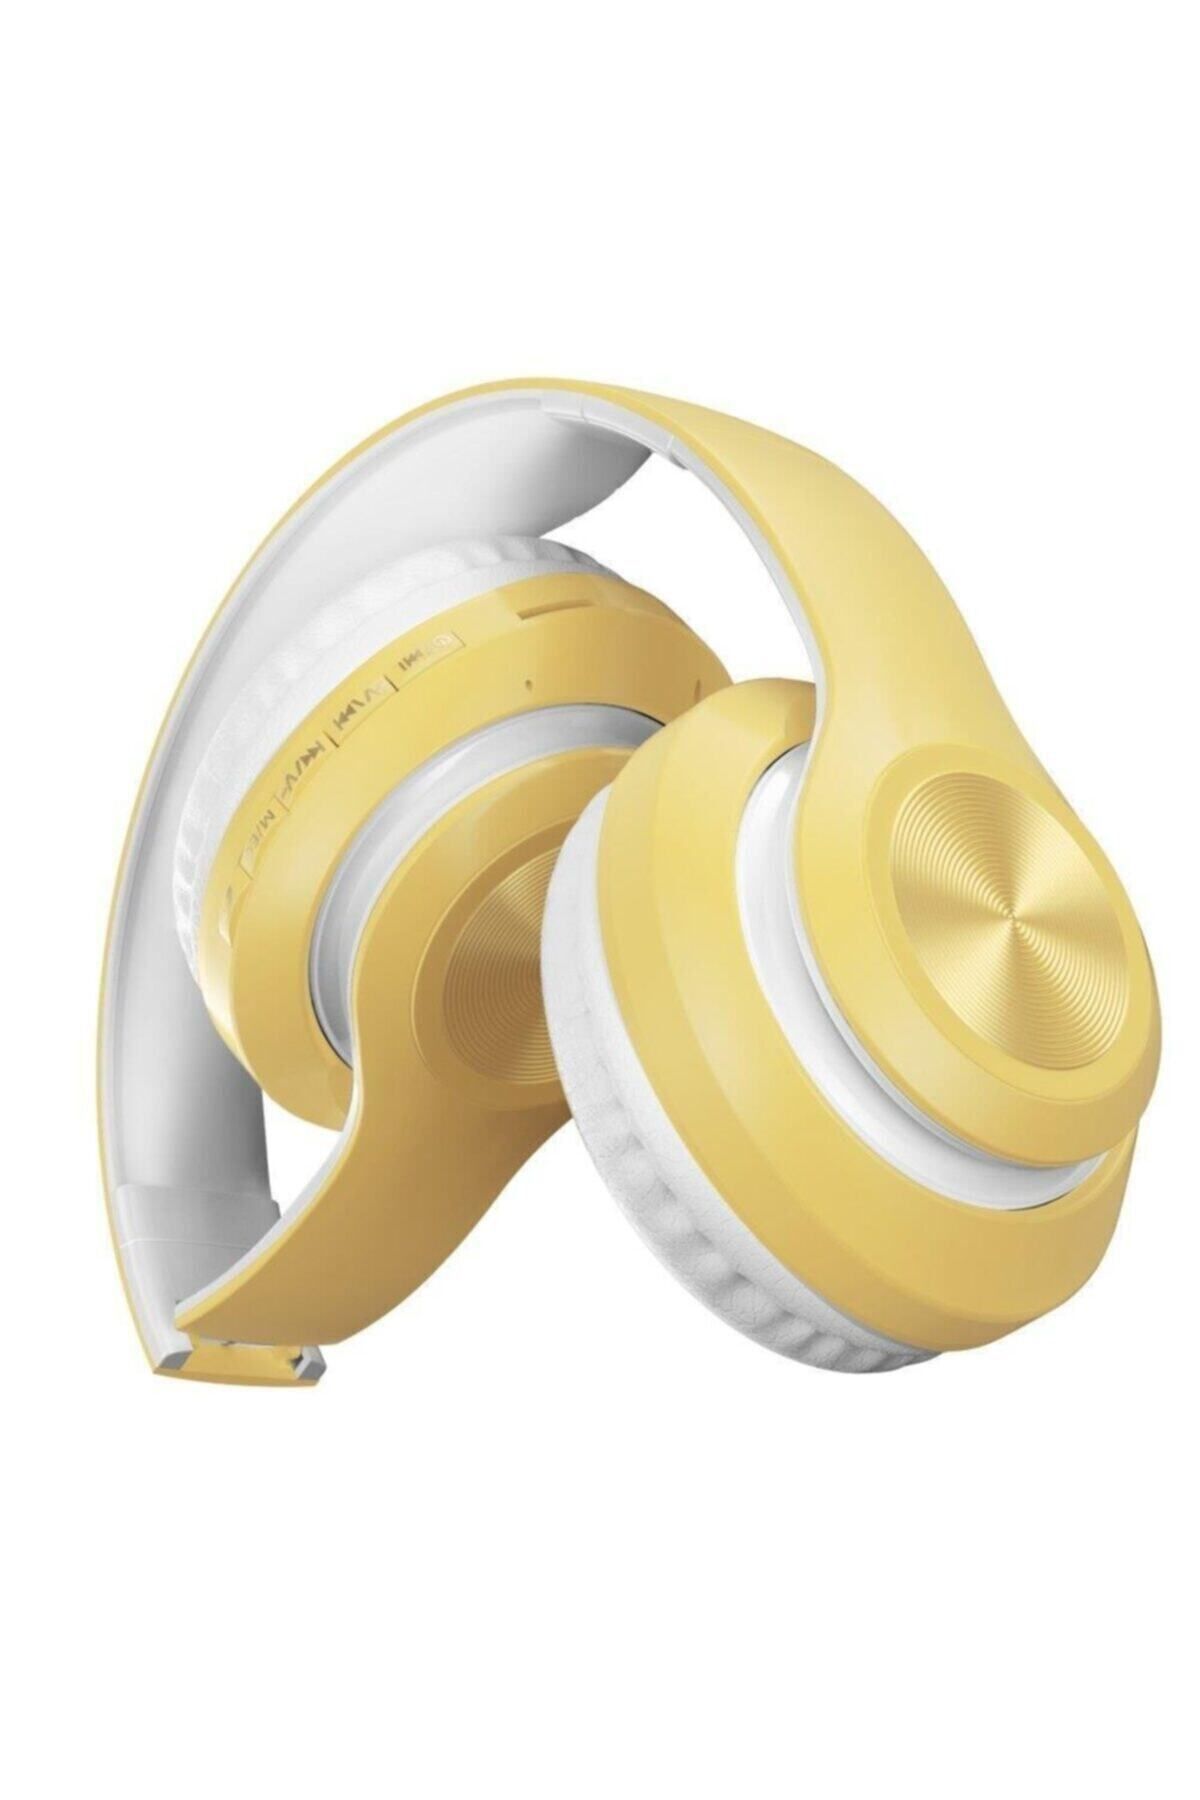 Polygold P68 Bluetooth Kulaklık Kablosuz Stereo Kulaklık Macaron Kulaklık Renkli-sarı